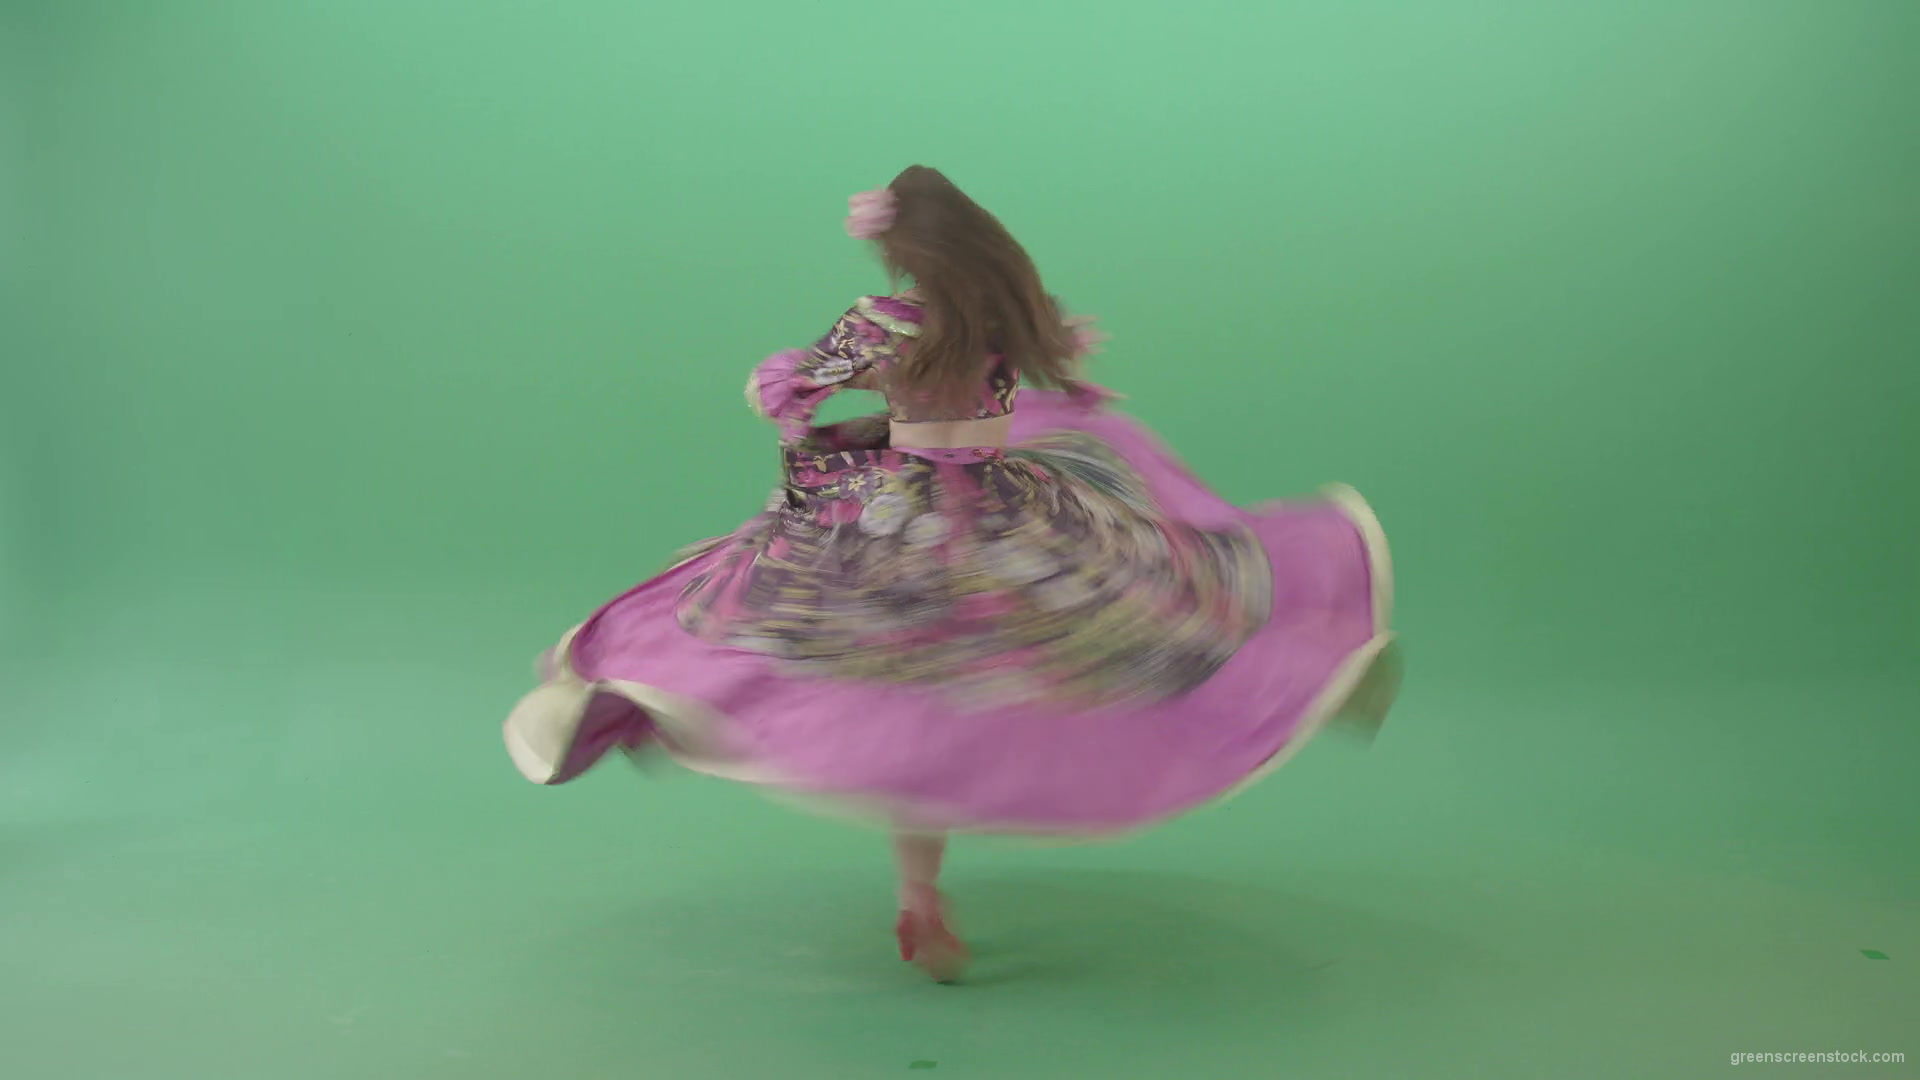 Beautiful-girl-in-balkan-pink-dress-dancing-gypsy-folk-dance-isolated-on-green-screen-4K-Video-Clip-1920_009 Green Screen Stock